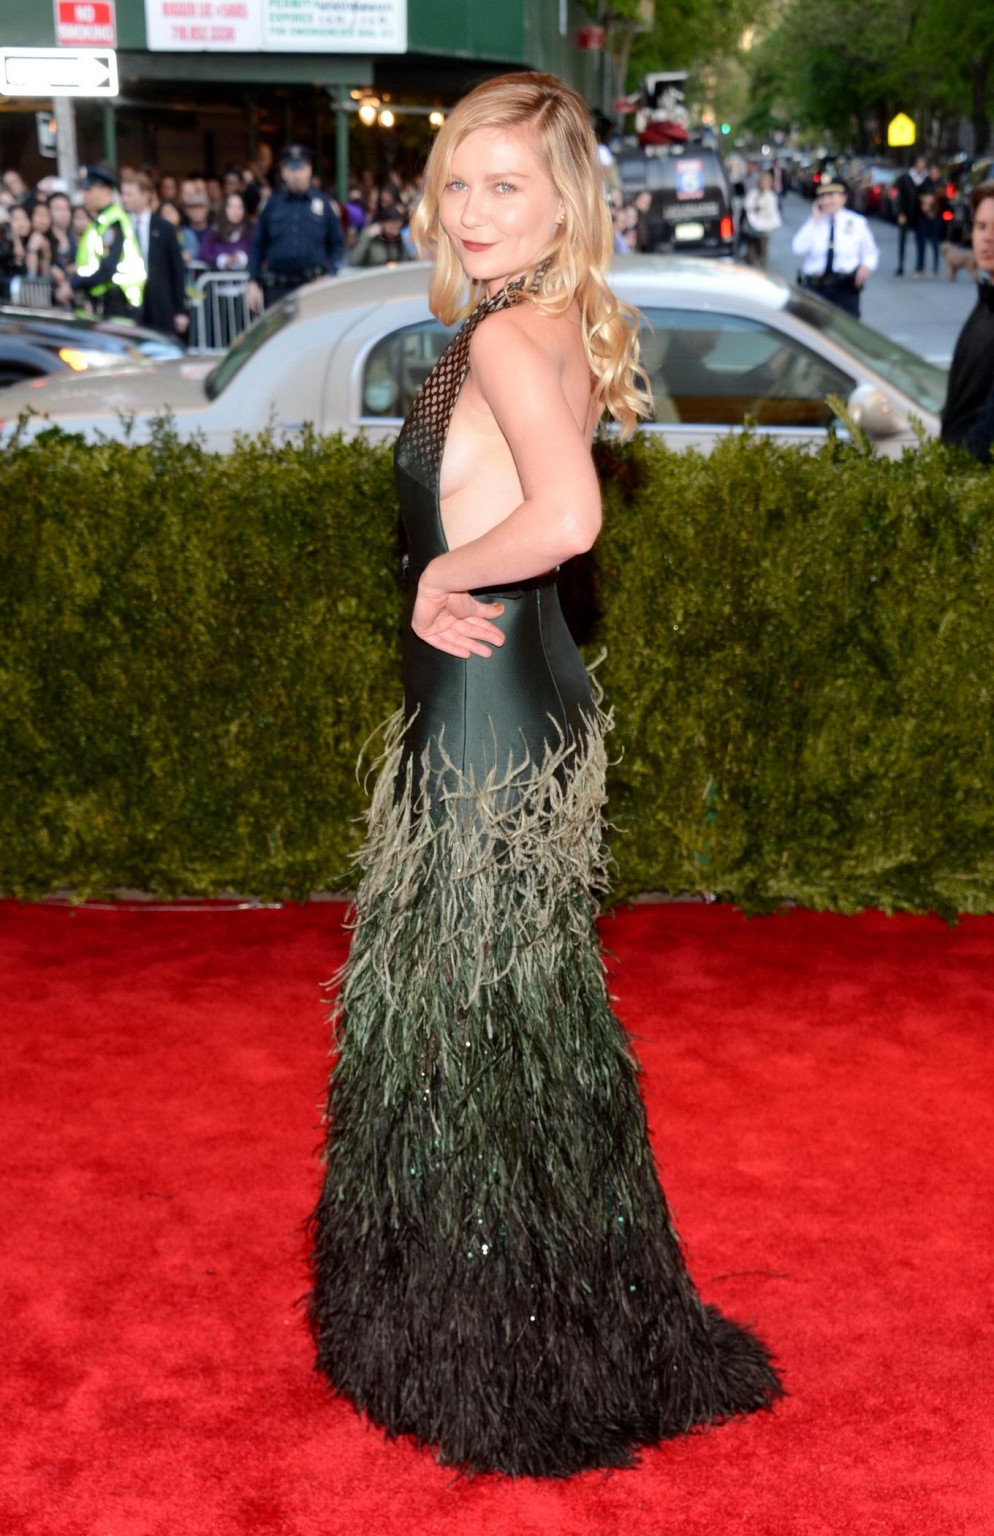 Braless Kirsten Dunst showing cleavage  side boob at the 2013 Met Gala in NYC #75233095